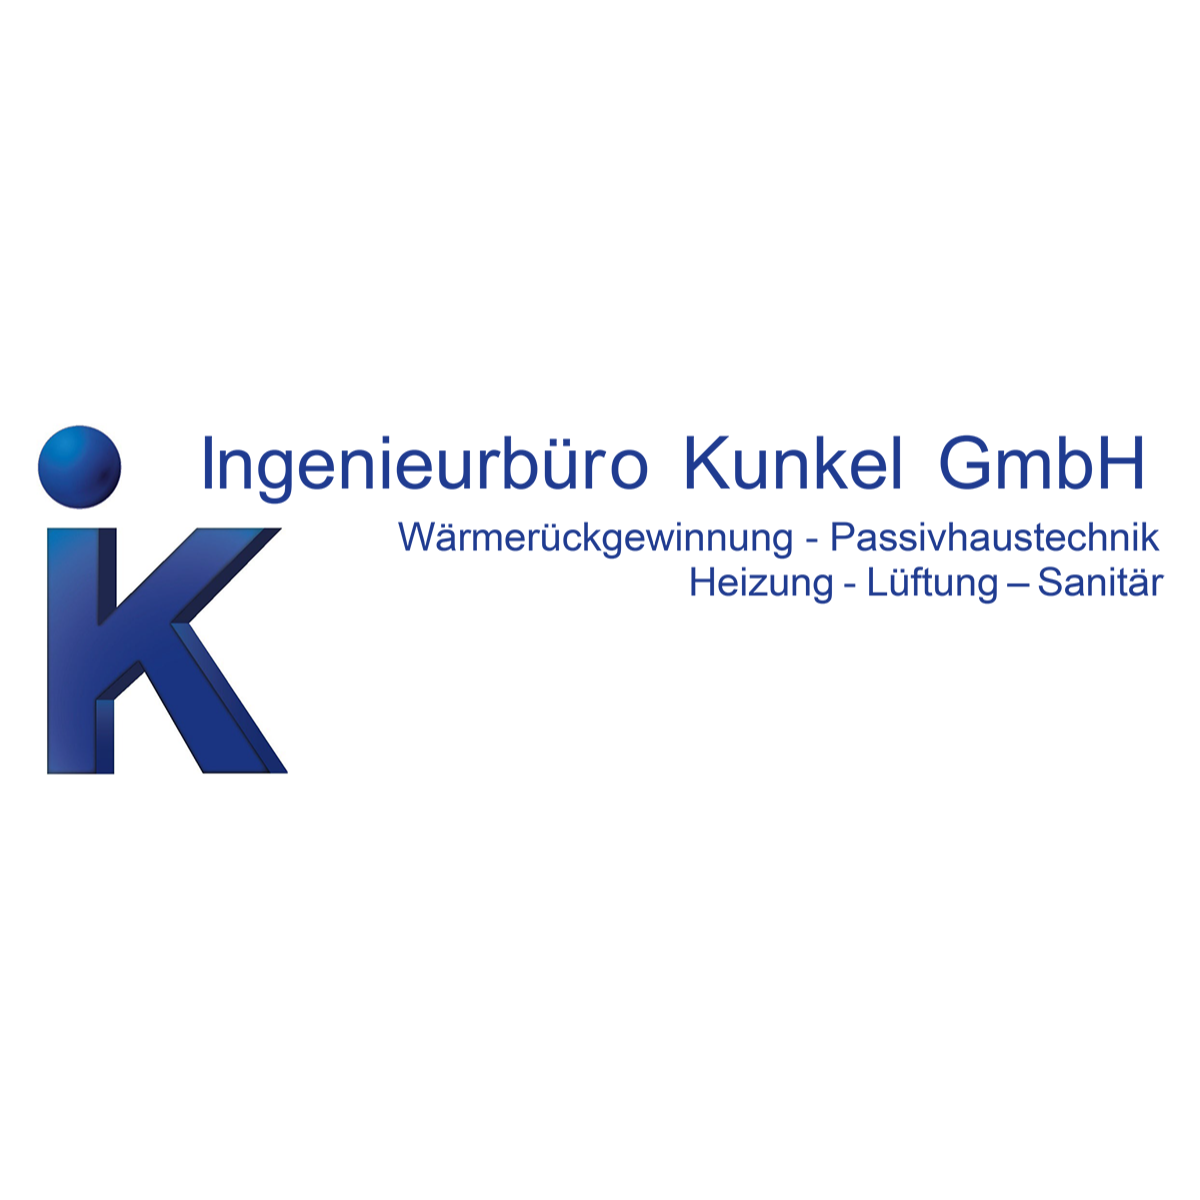 Ingenieurbüro Kunkel GmbH  